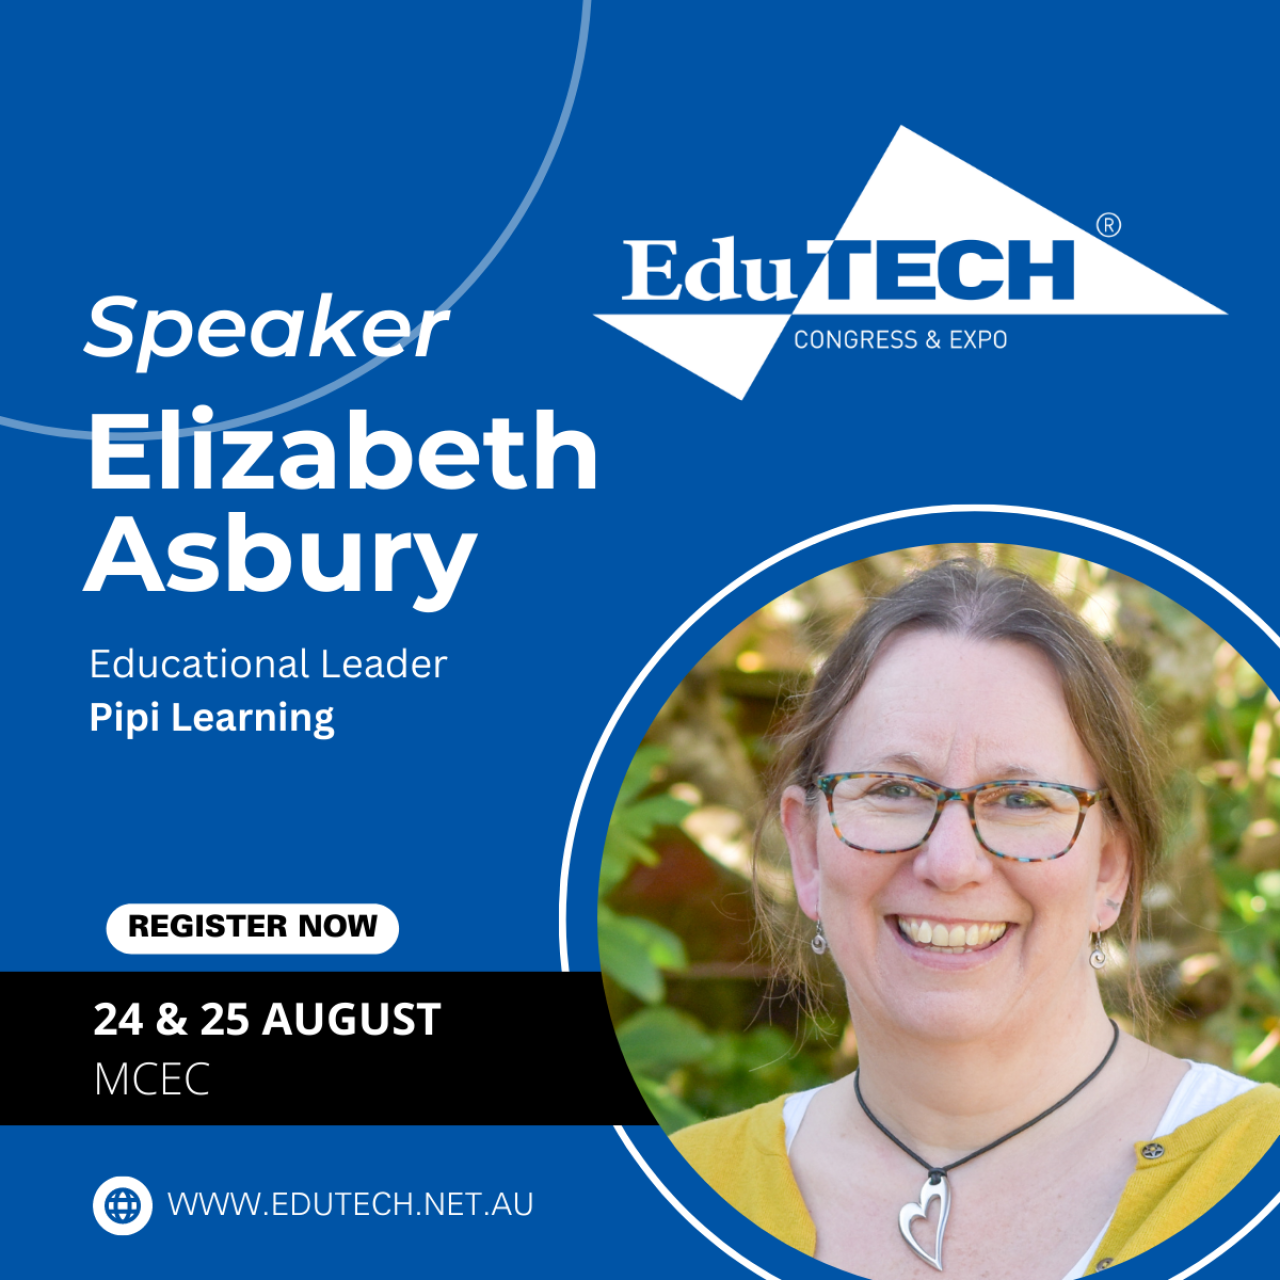 Speaker Elizabeth Asbury Educational Leader Pipi Learning EduTECH CONGRESS & EXPO REGISTER NOW 24 & 25 AUGUST MCEC © WWW.EDUTECH.NET.AU.